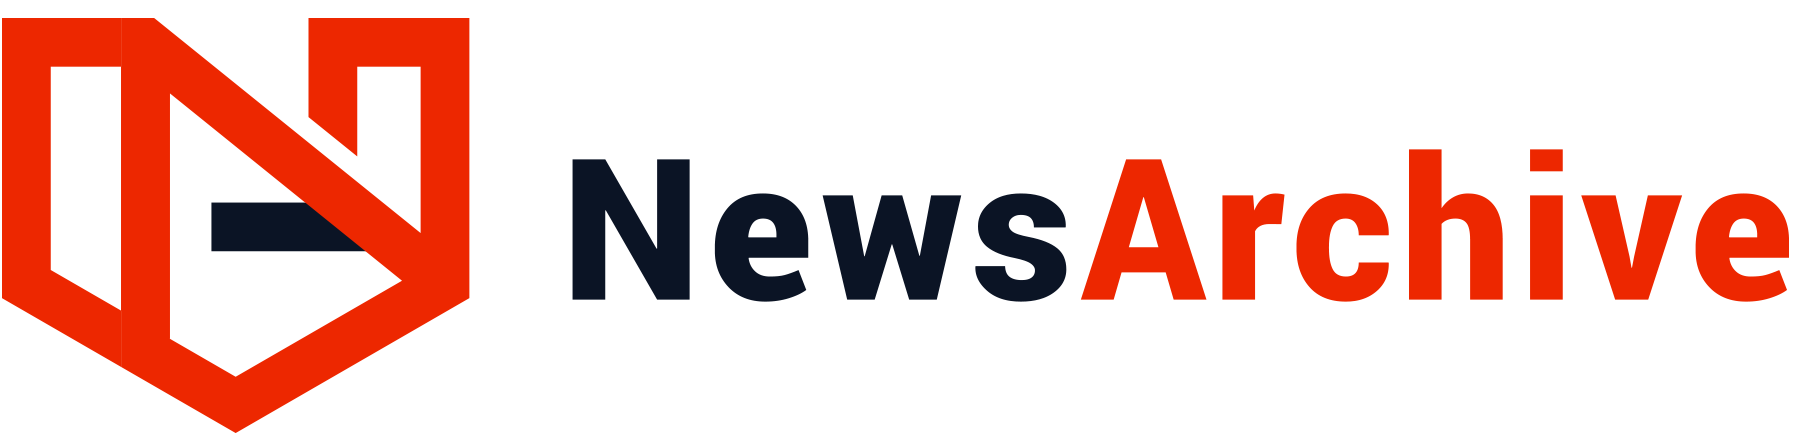 newsarchive logo